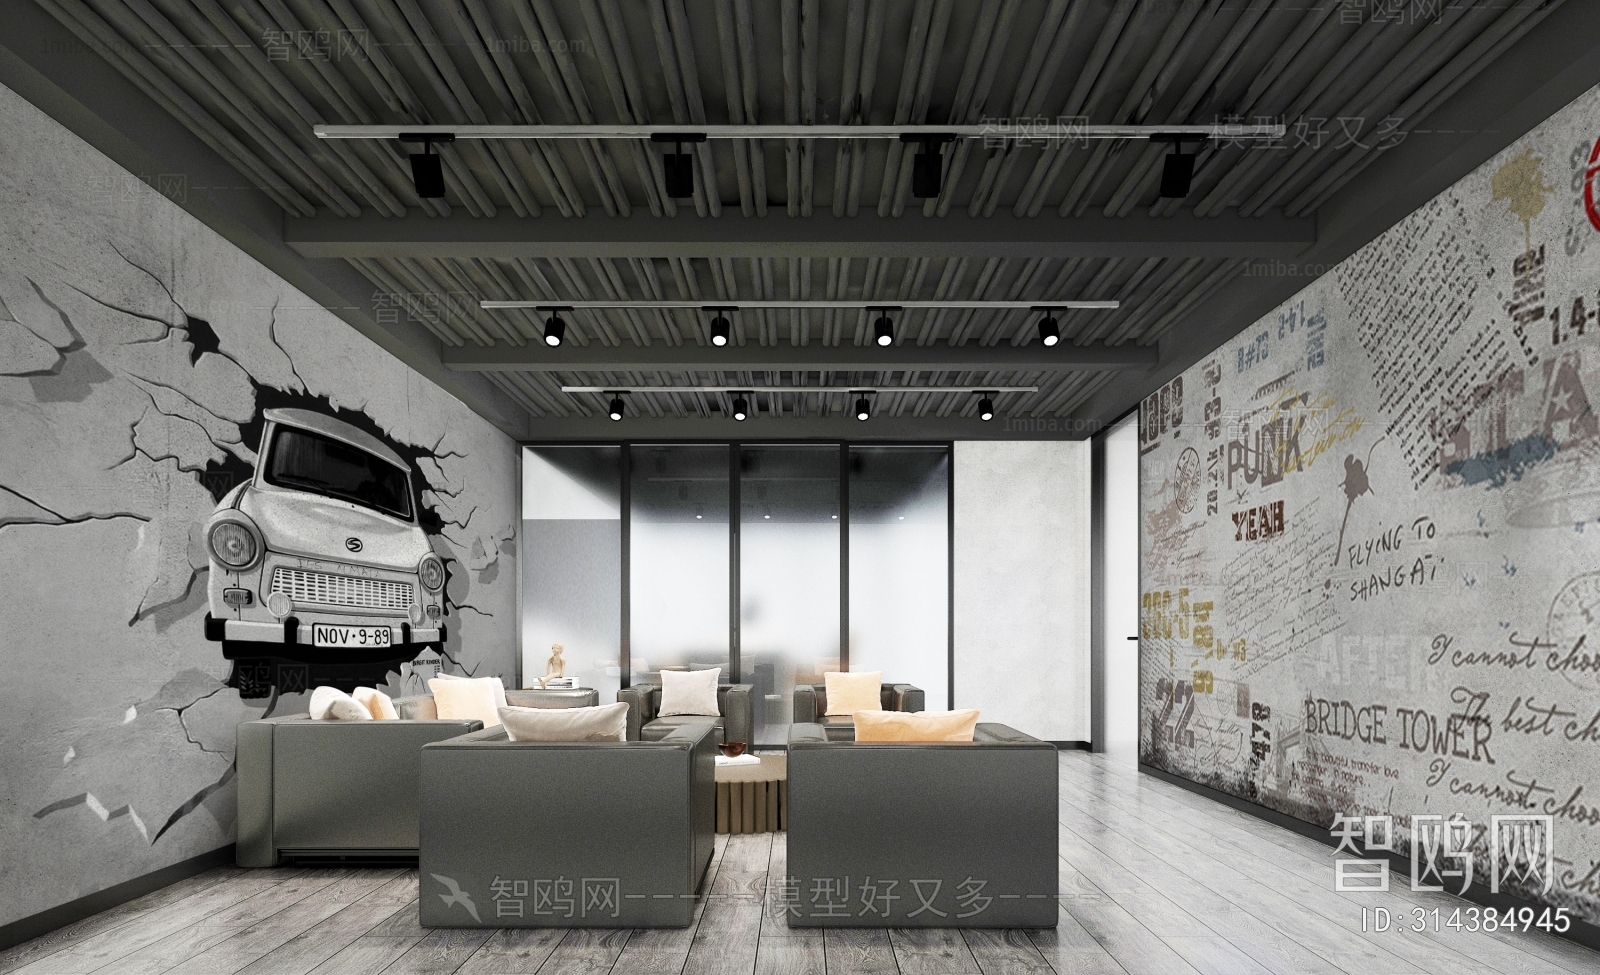 Industrial Style Automobile 4S Shop